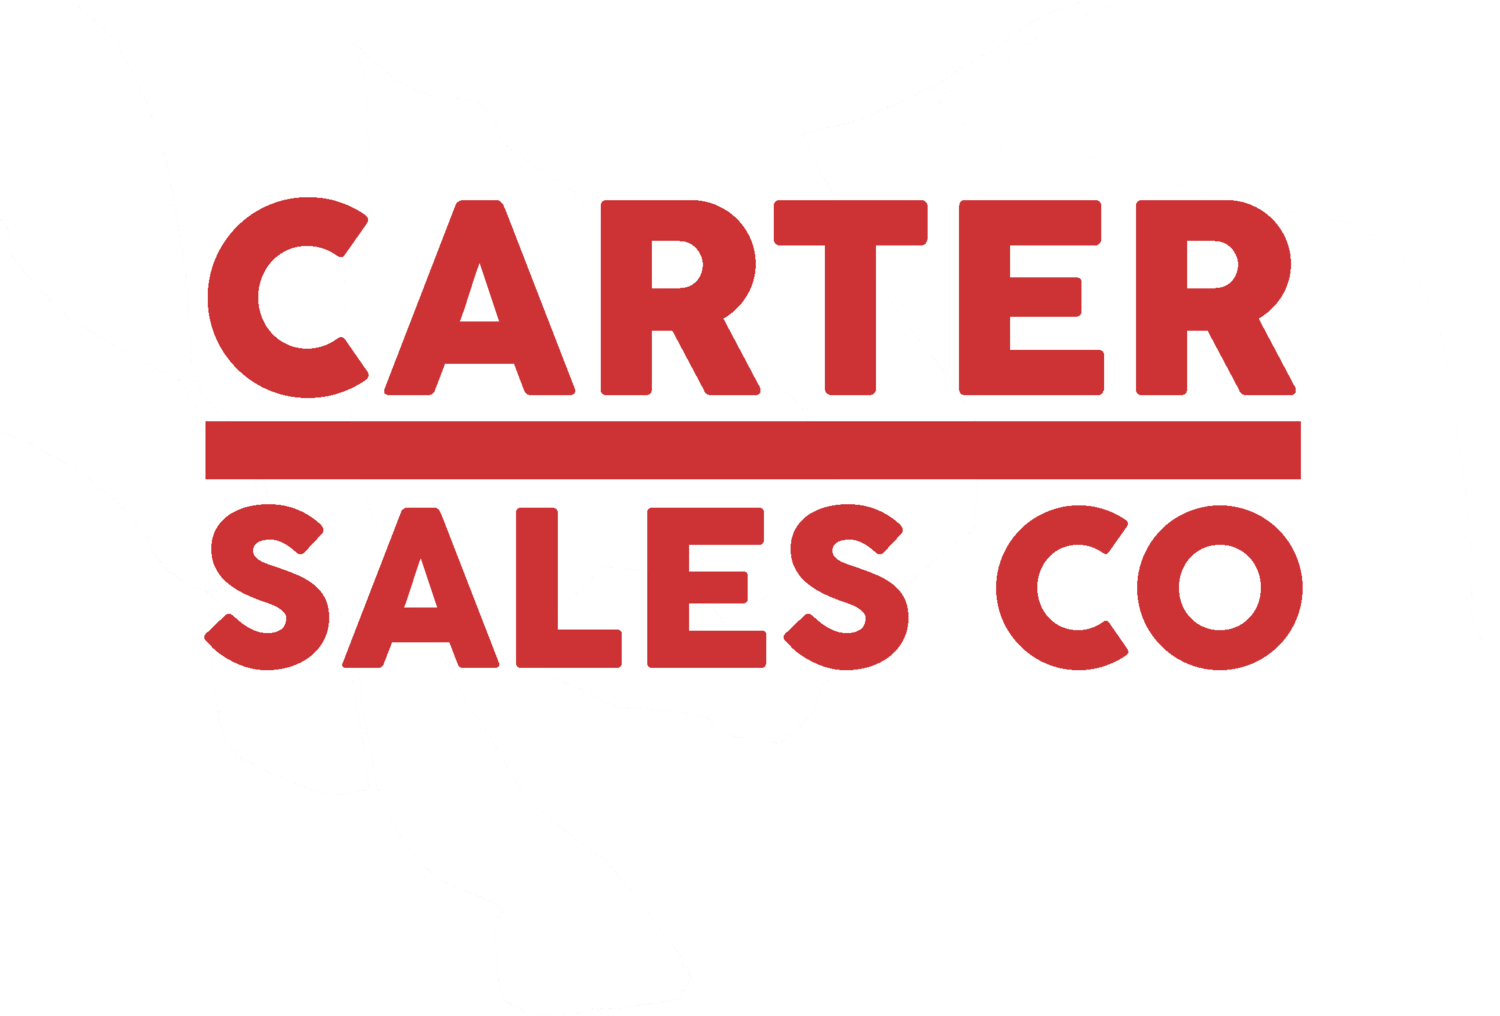 Carter Sales Co.